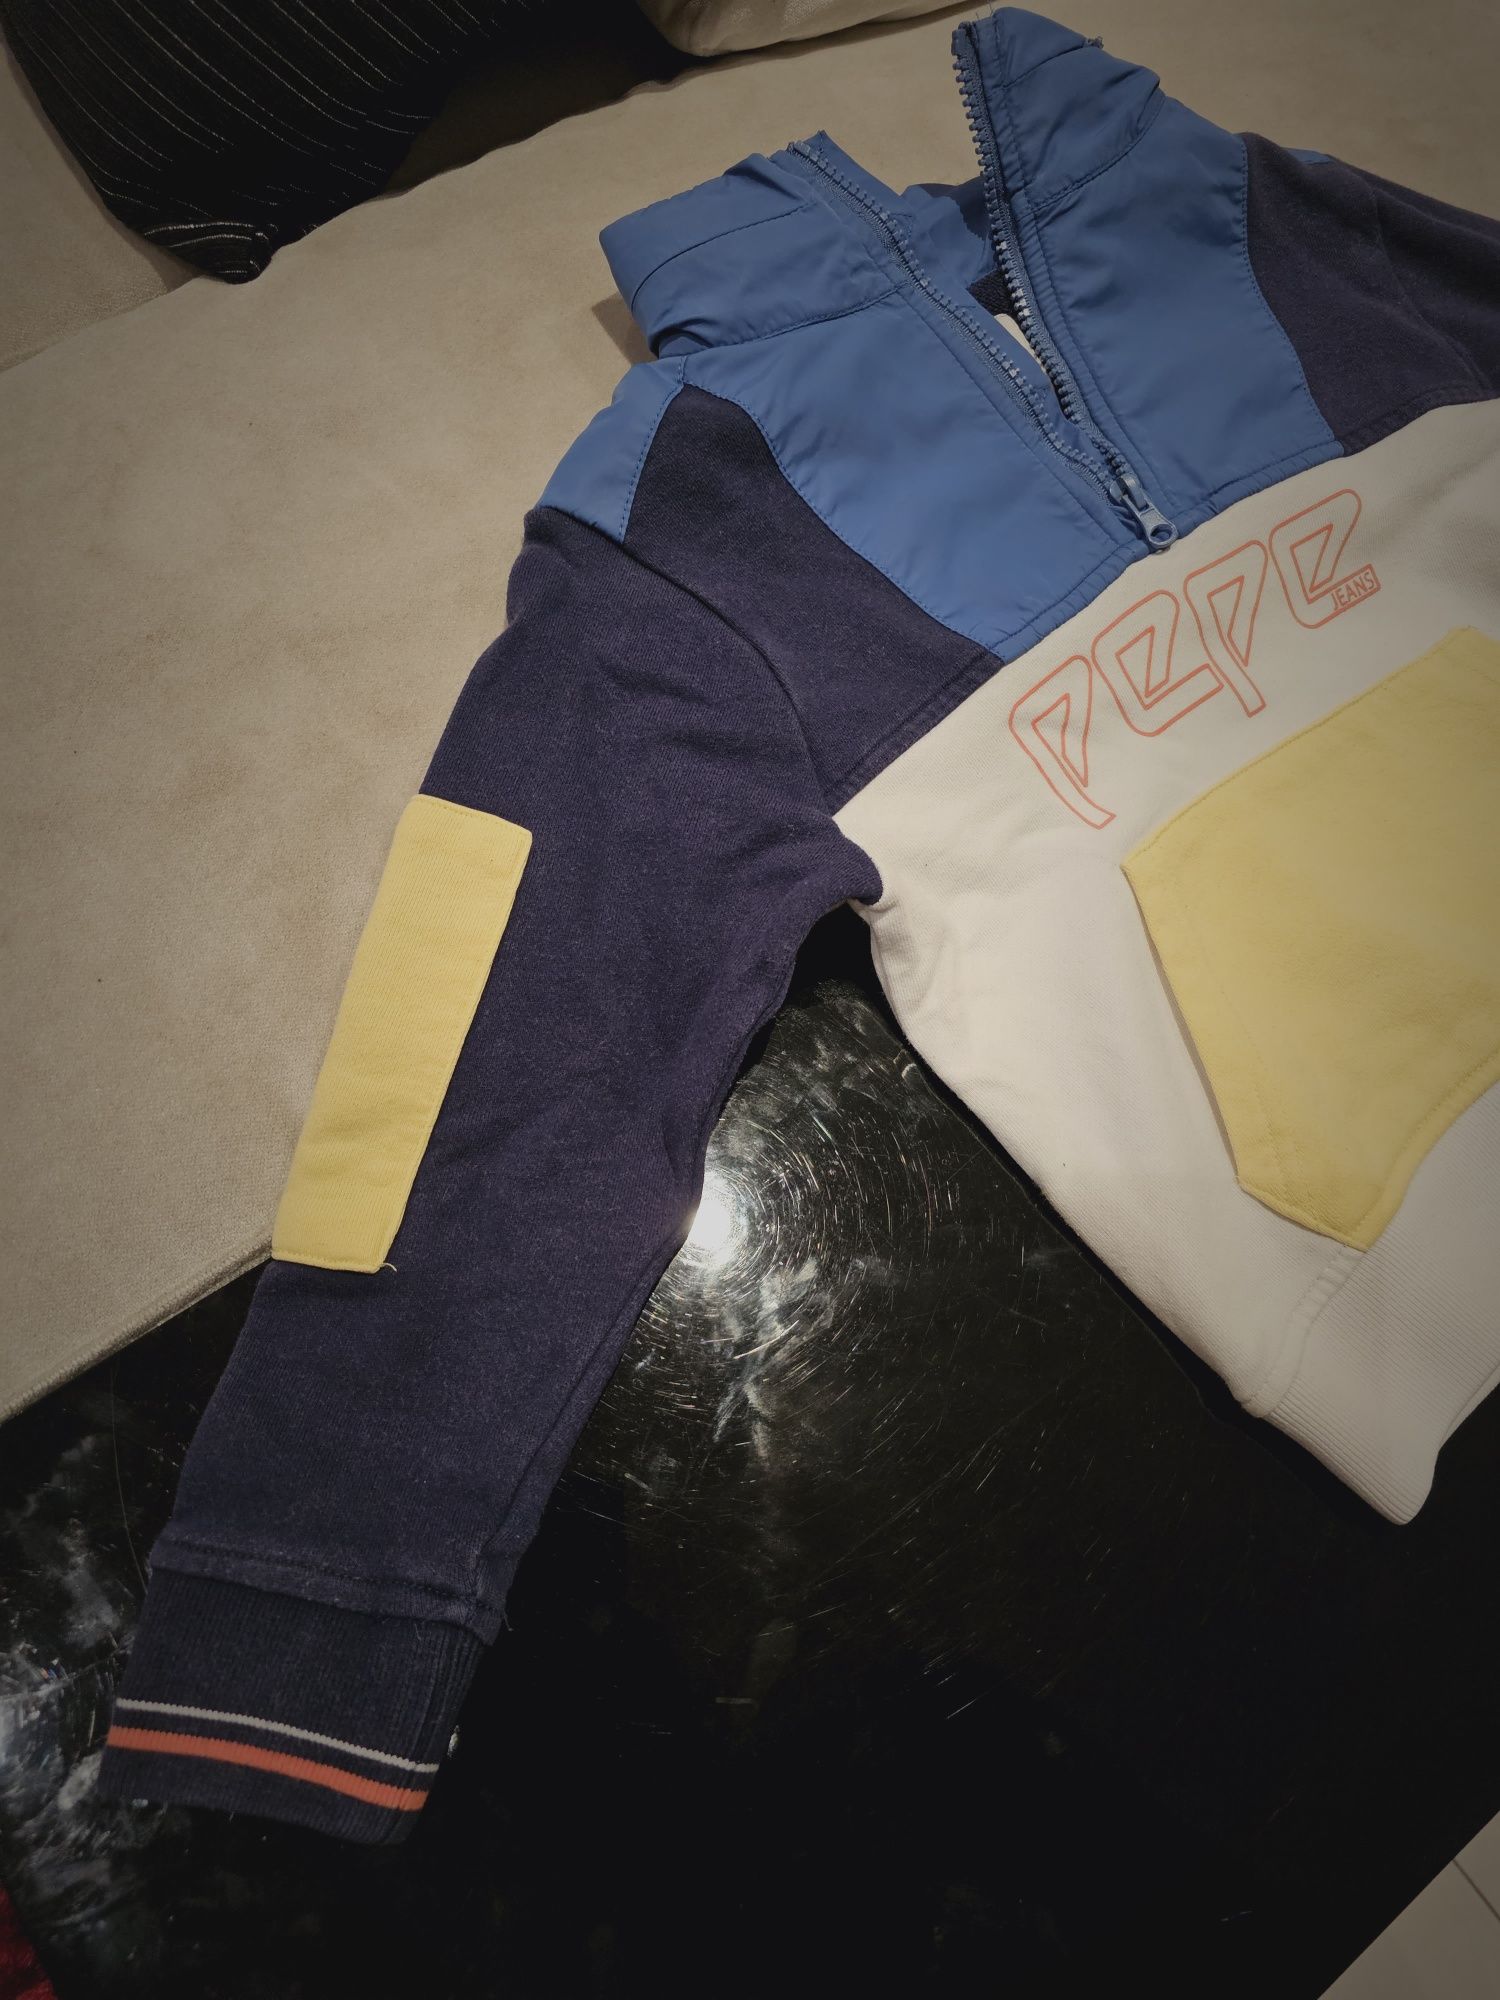 Camisola Pepe Jeans com carapuço